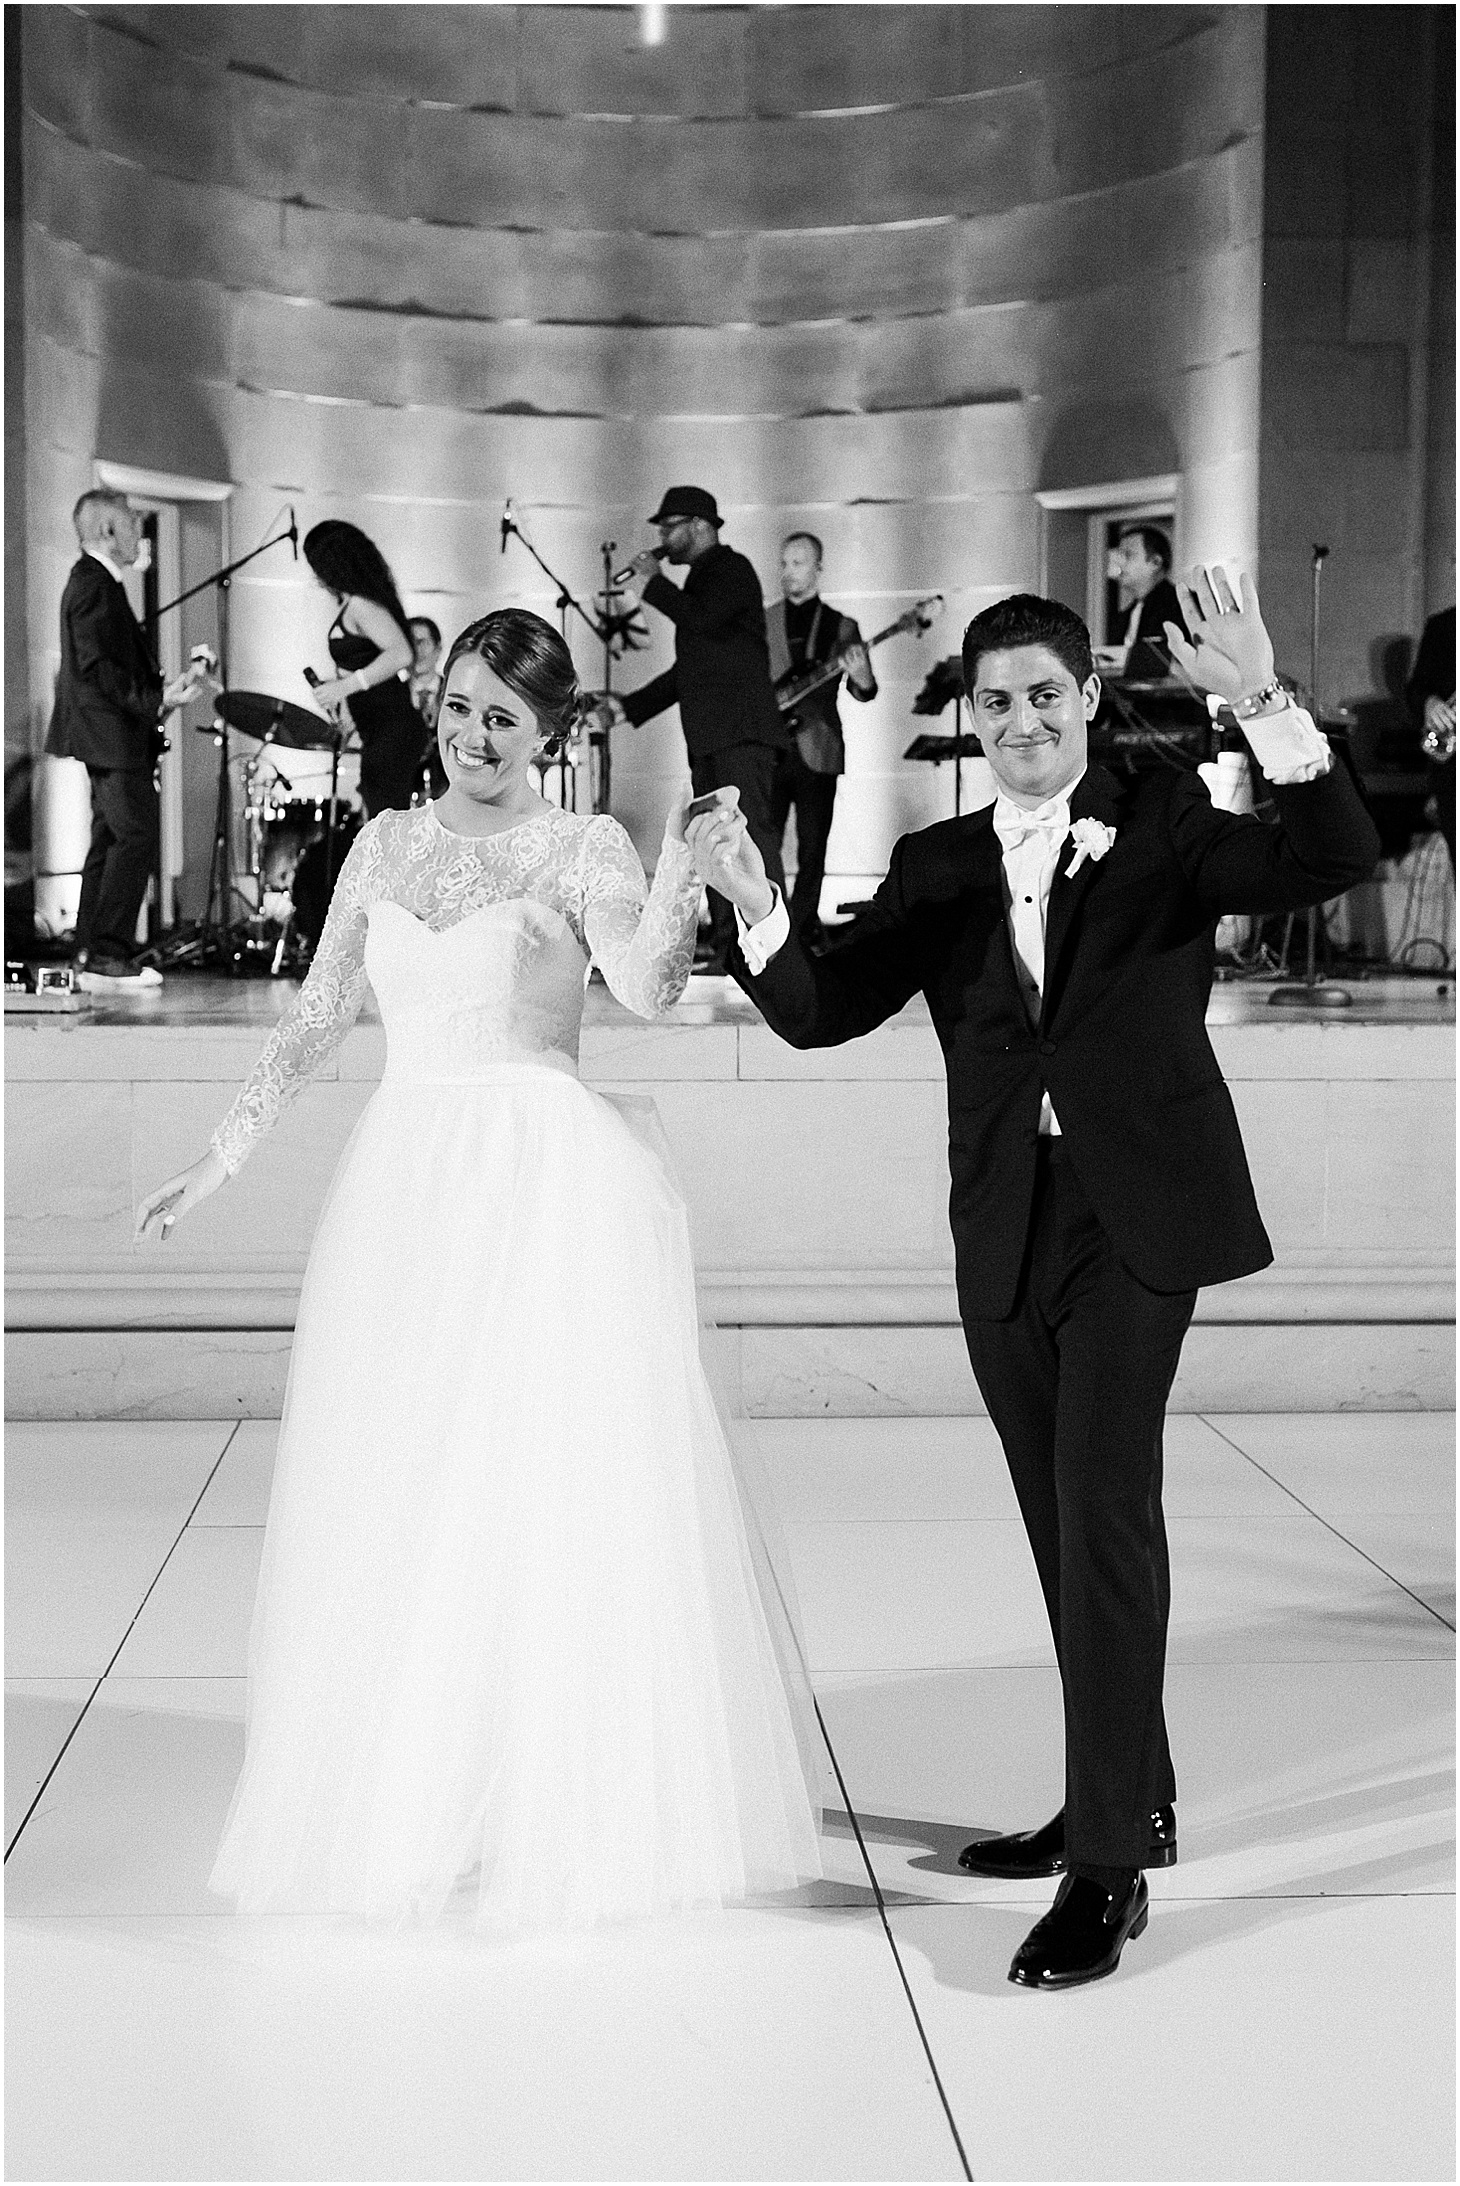 First Dance, Wedding Reception at Andrew Mellon Auditorium, Sarah Bradshaw Photography, DC Wedding Photographer